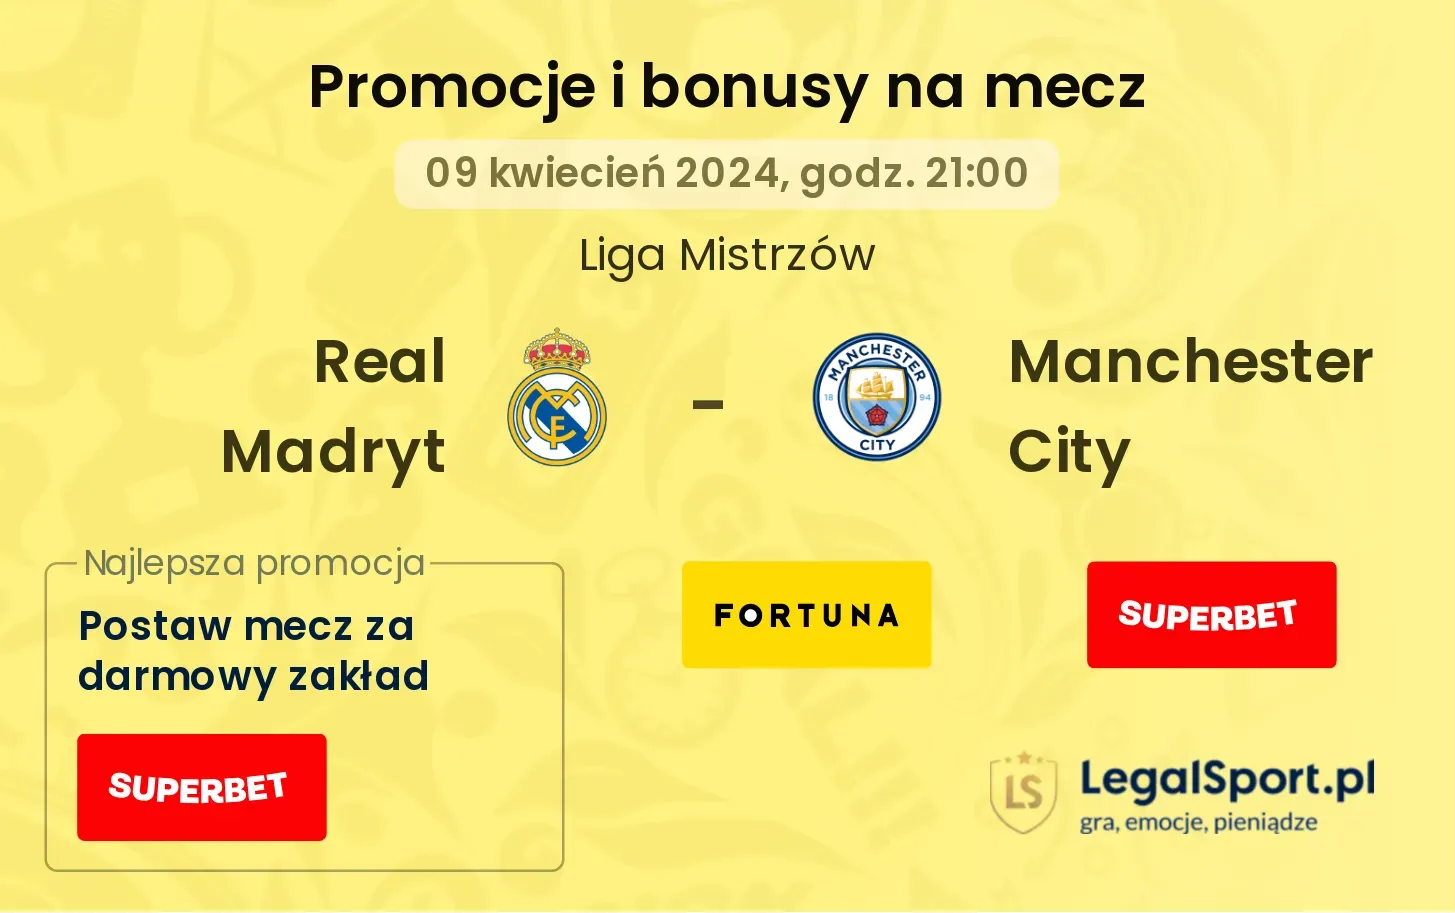 Real Madryt - Manchester City promocje bonusy na mecz